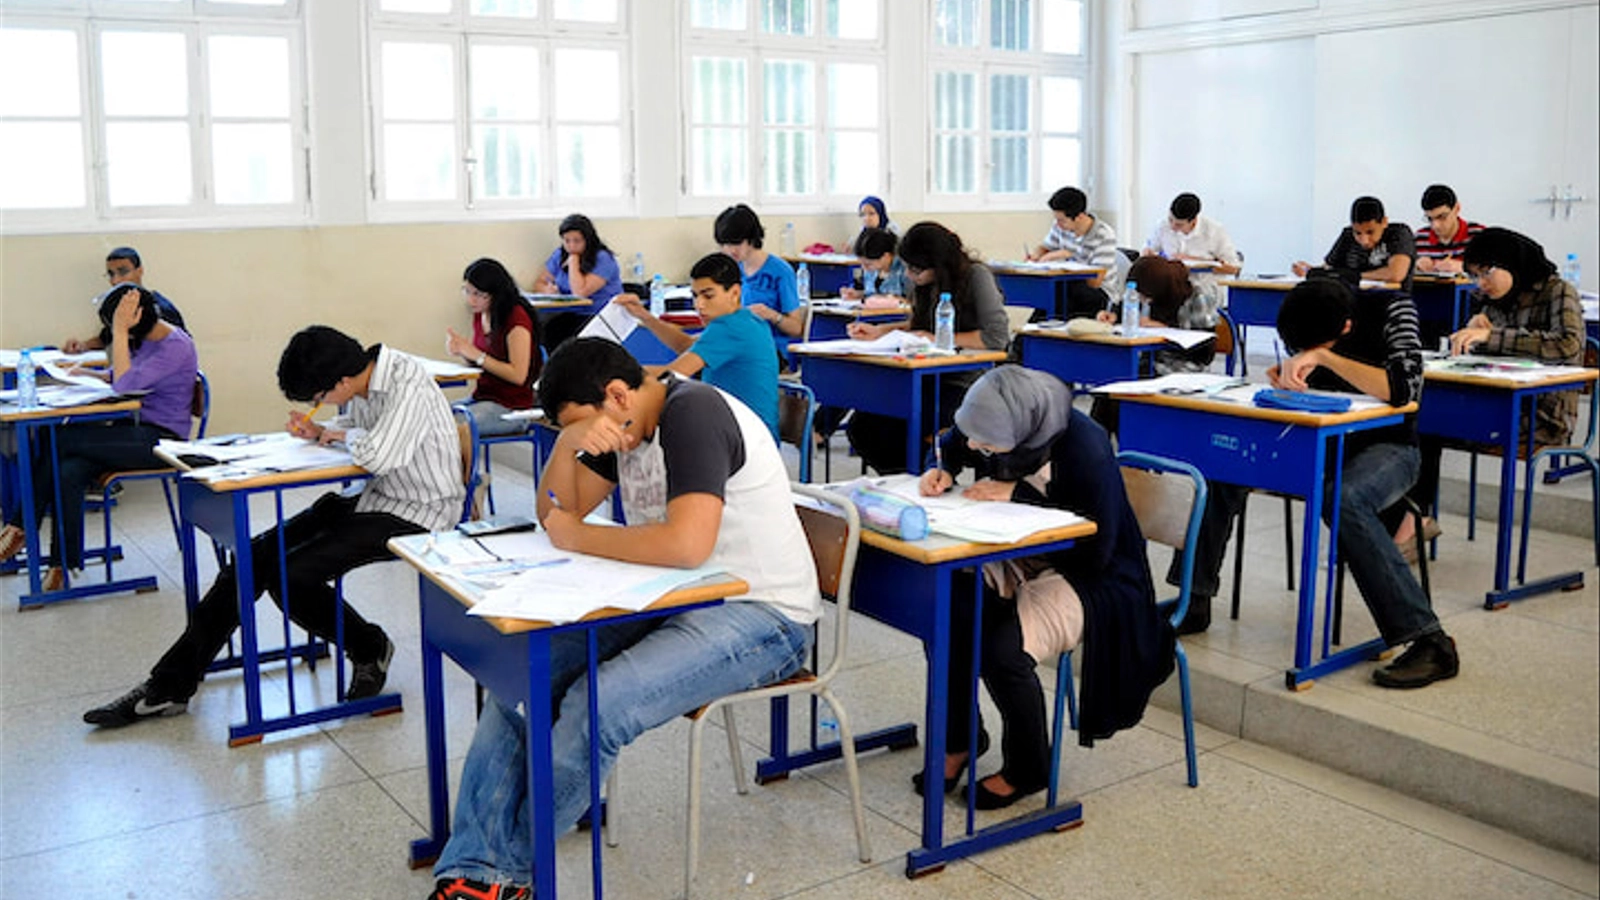 Anbaetv – ضبط 12 تلميذ في حالة غش خلال امتحانات البكالوريا ببني ملال – حوادث